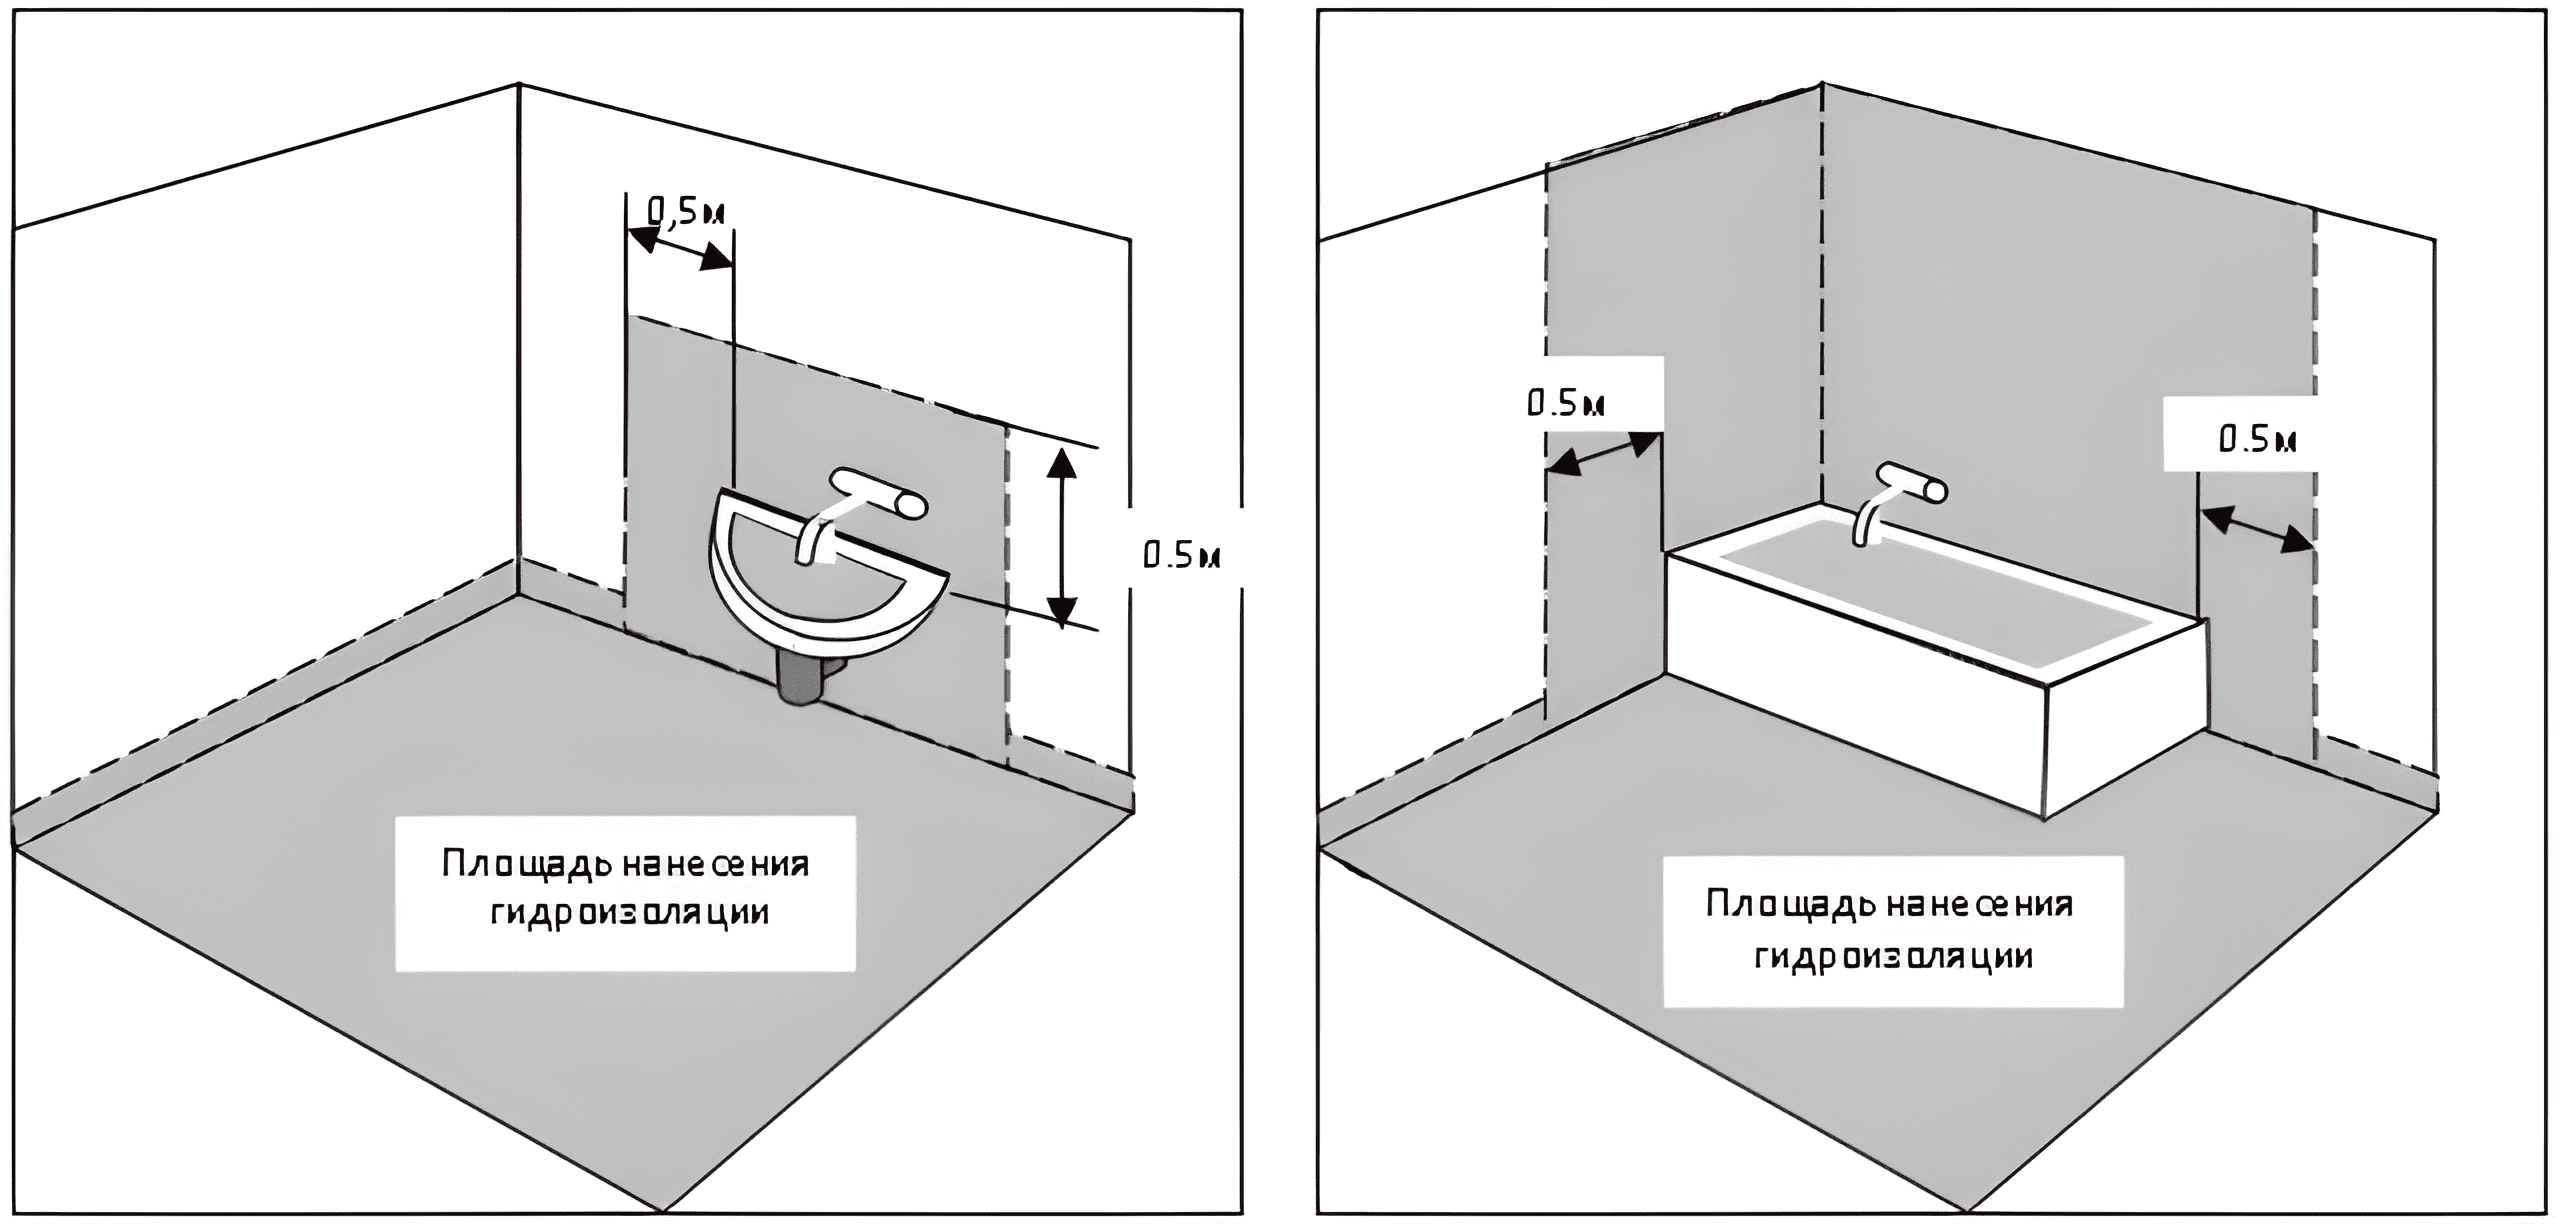 Площадь гидроизоляции. Схема гидроизоляции ванной комнаты. Схема гидроизоляции санузла. Гидроизоляция ванны схема. Схема гидроизоляции пола санузла.